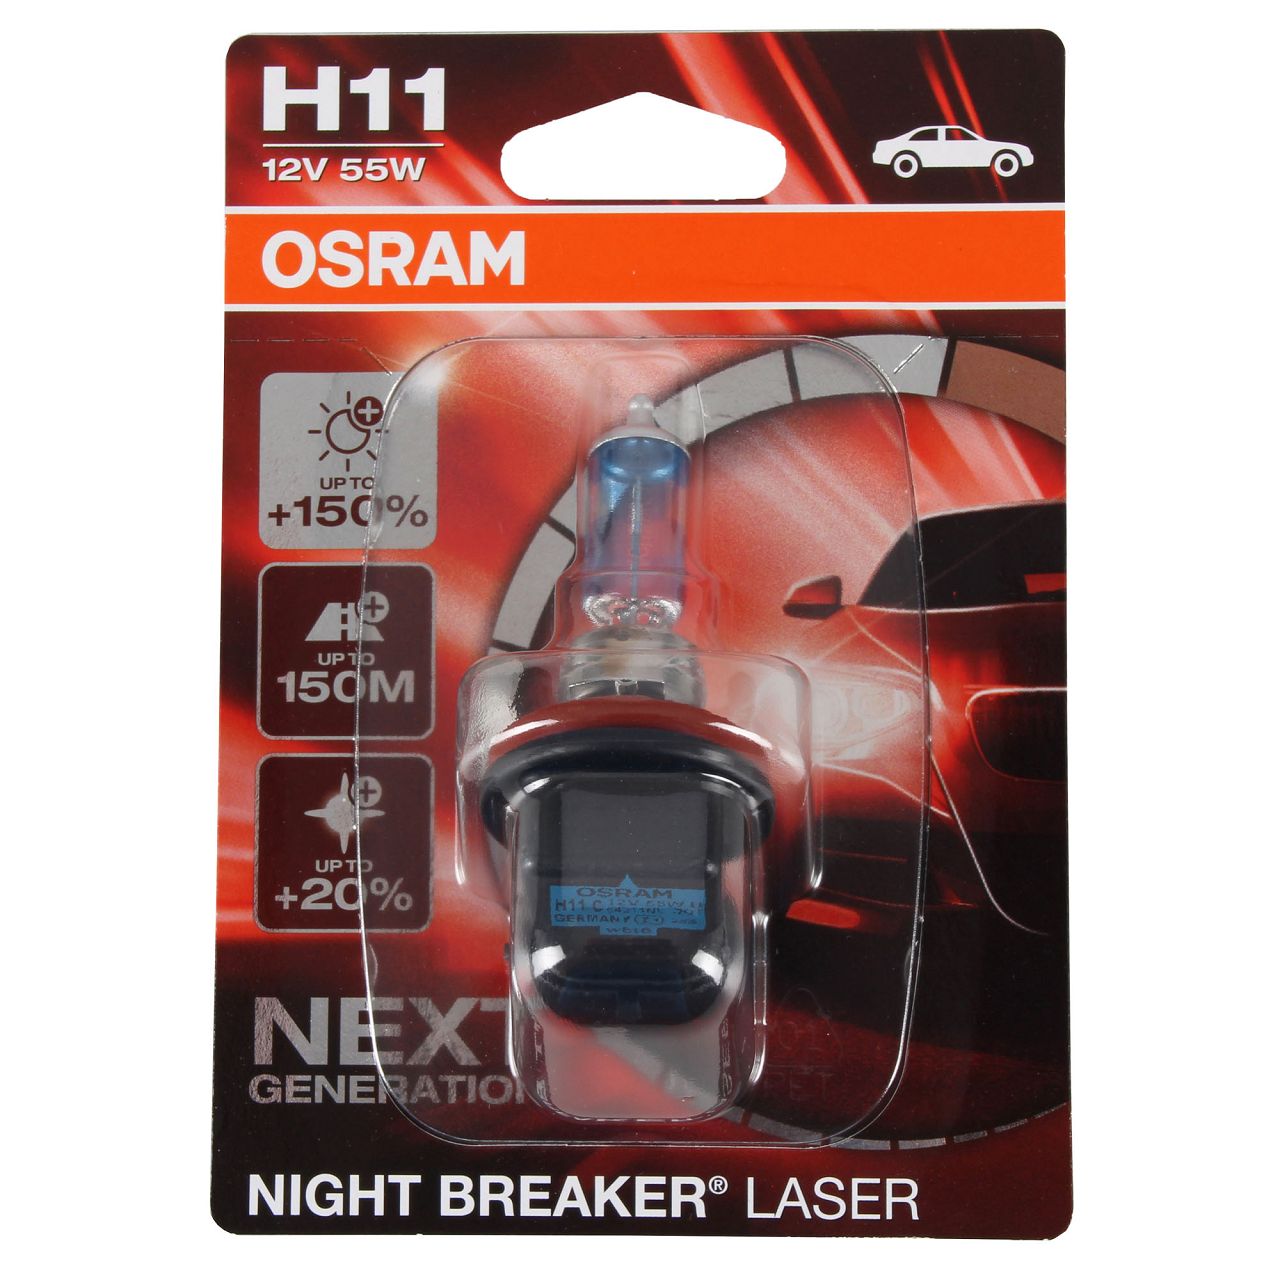 OSRAM Glühlampe H11 NIGHT BREAKER LASER 12V 55W PGJ19-2 next Generation +150%